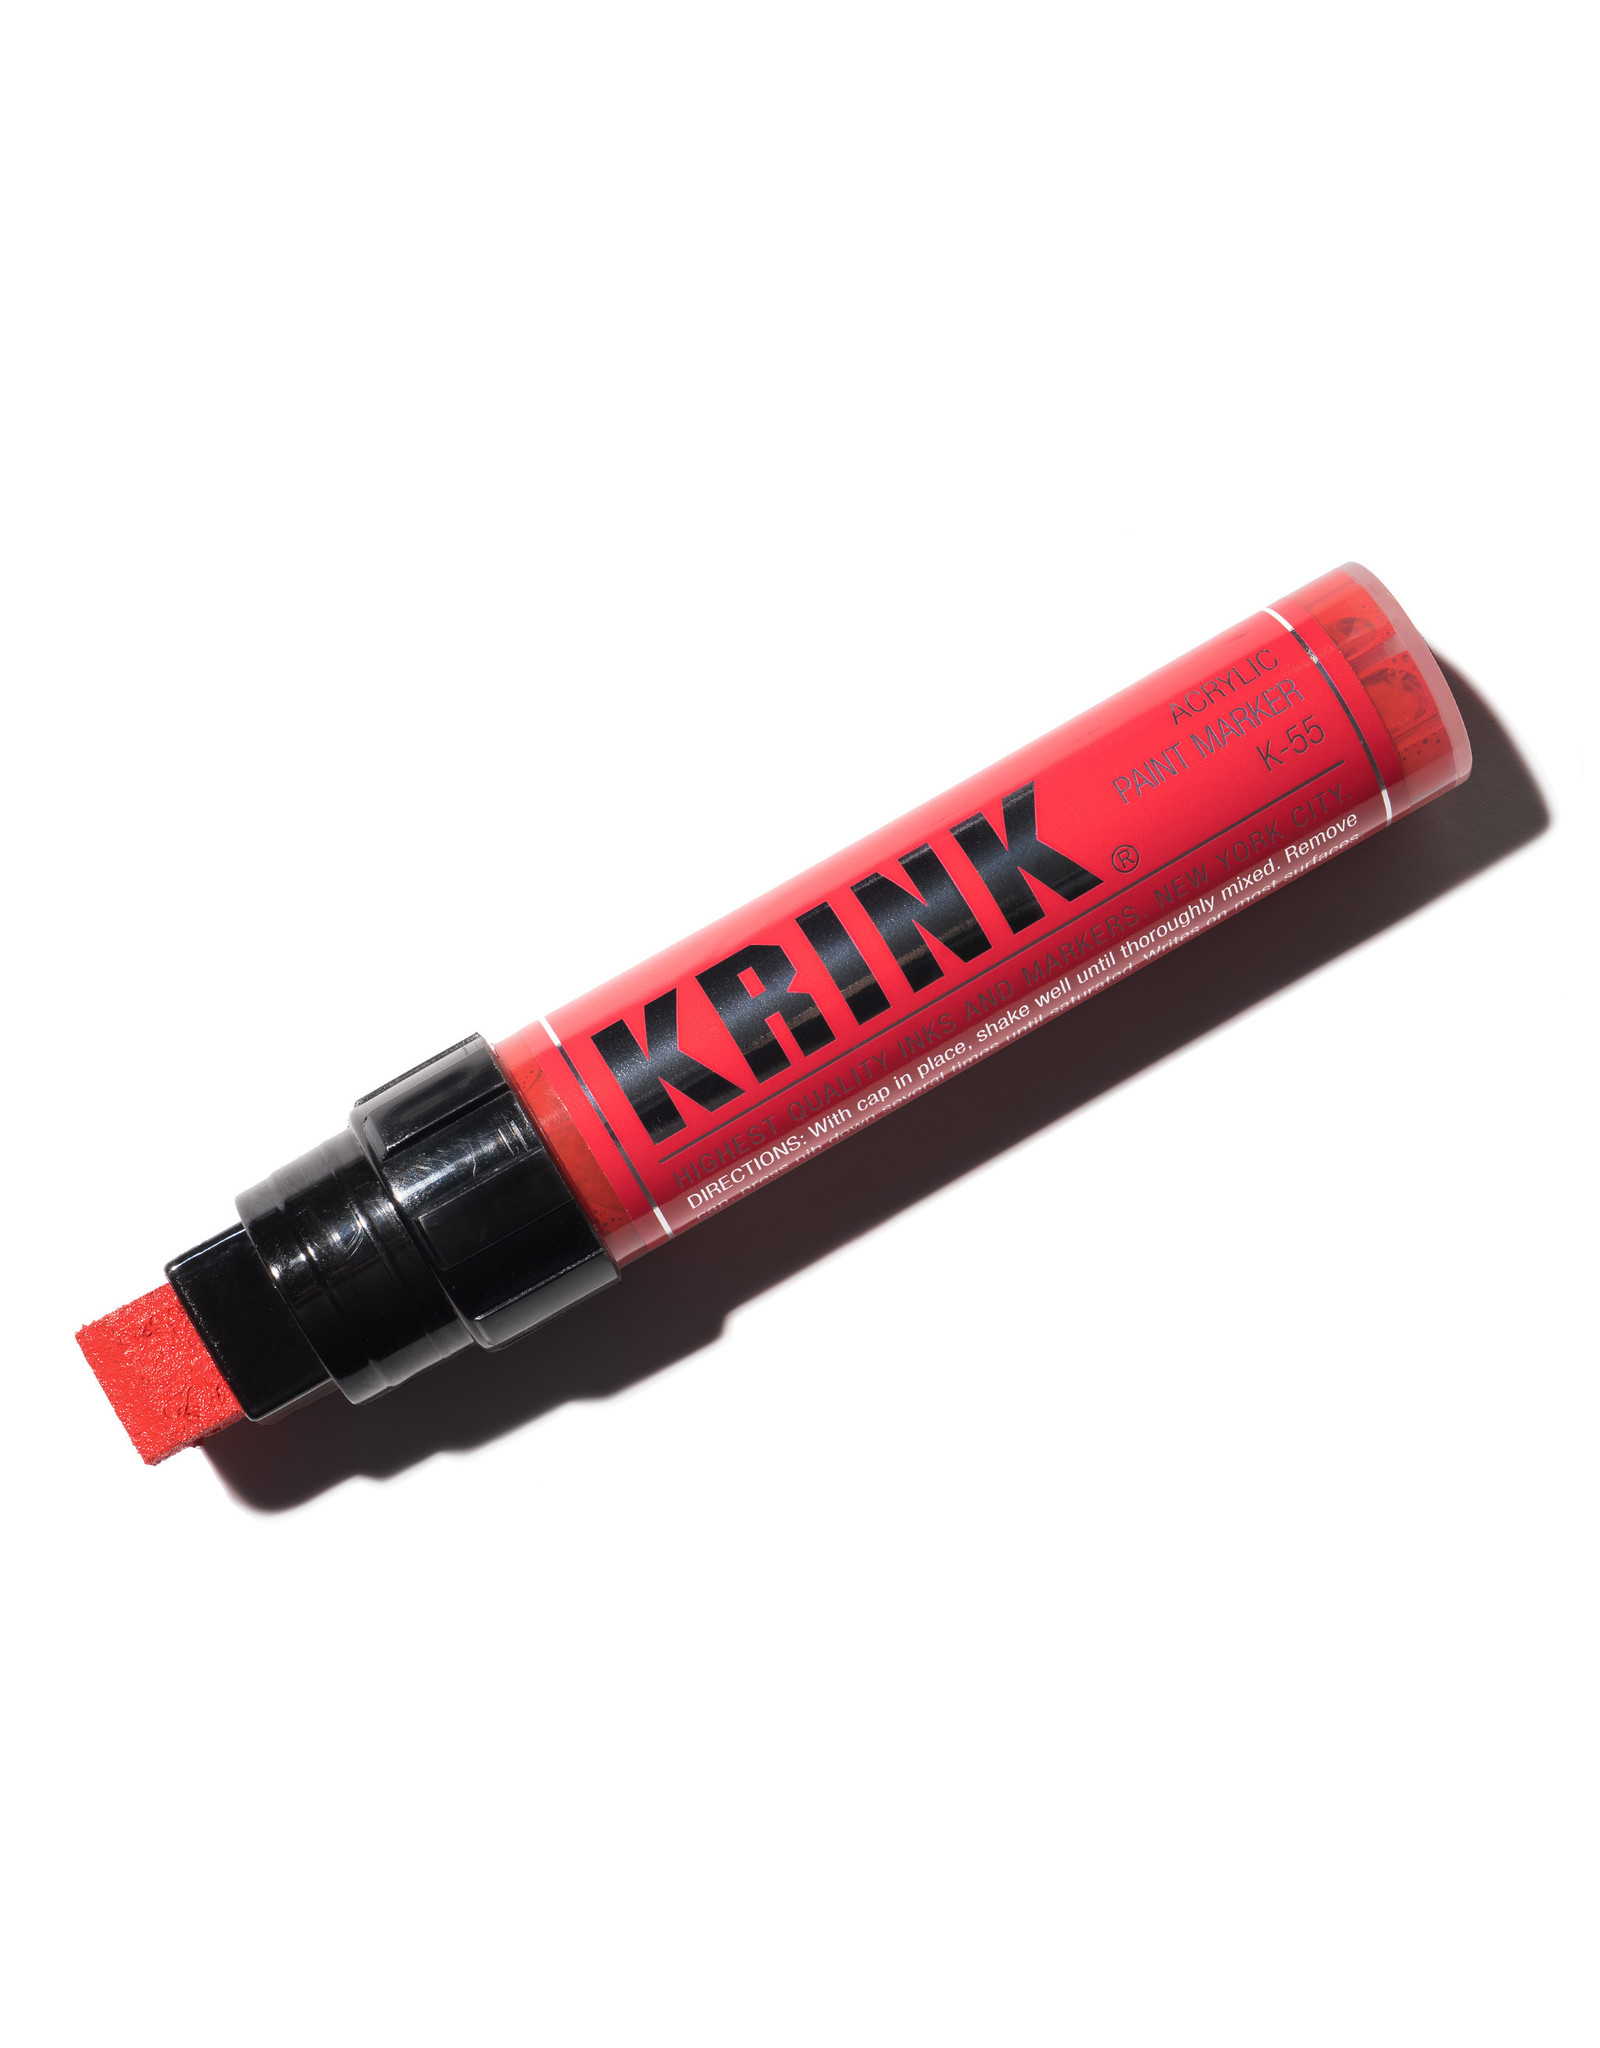 Krink Krink K-55 Acrylic Paint Marker, Red